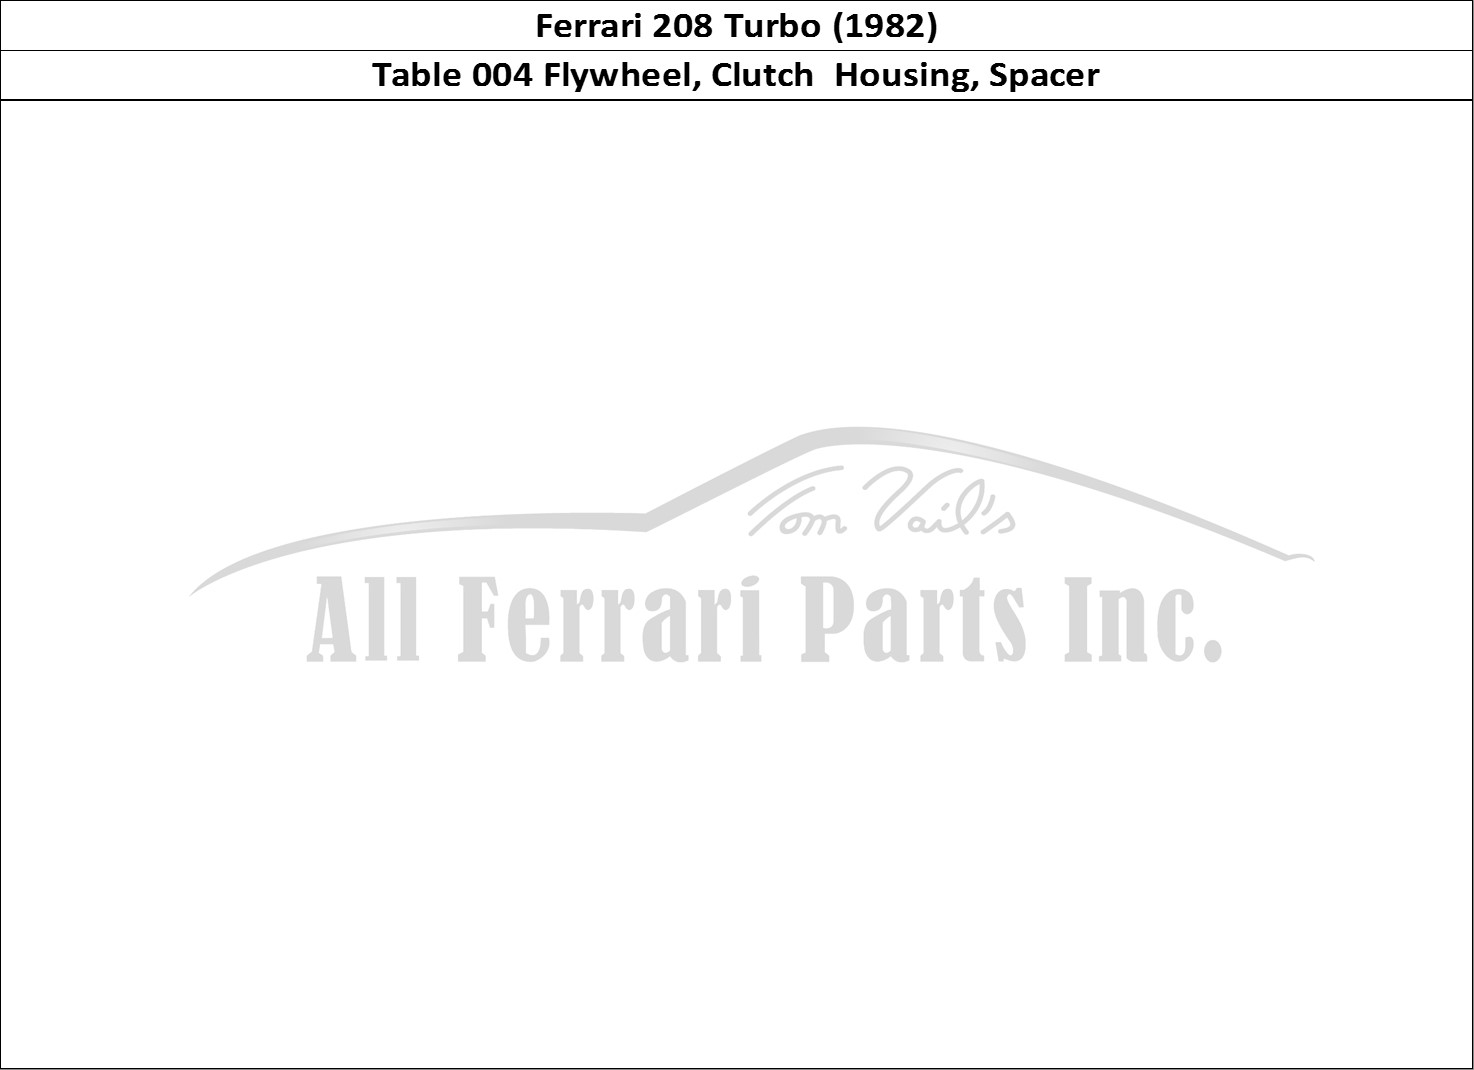 Ferrari Parts Ferrari 208 Turbo (1982) Page 004 Flywheel and Clutch Housi